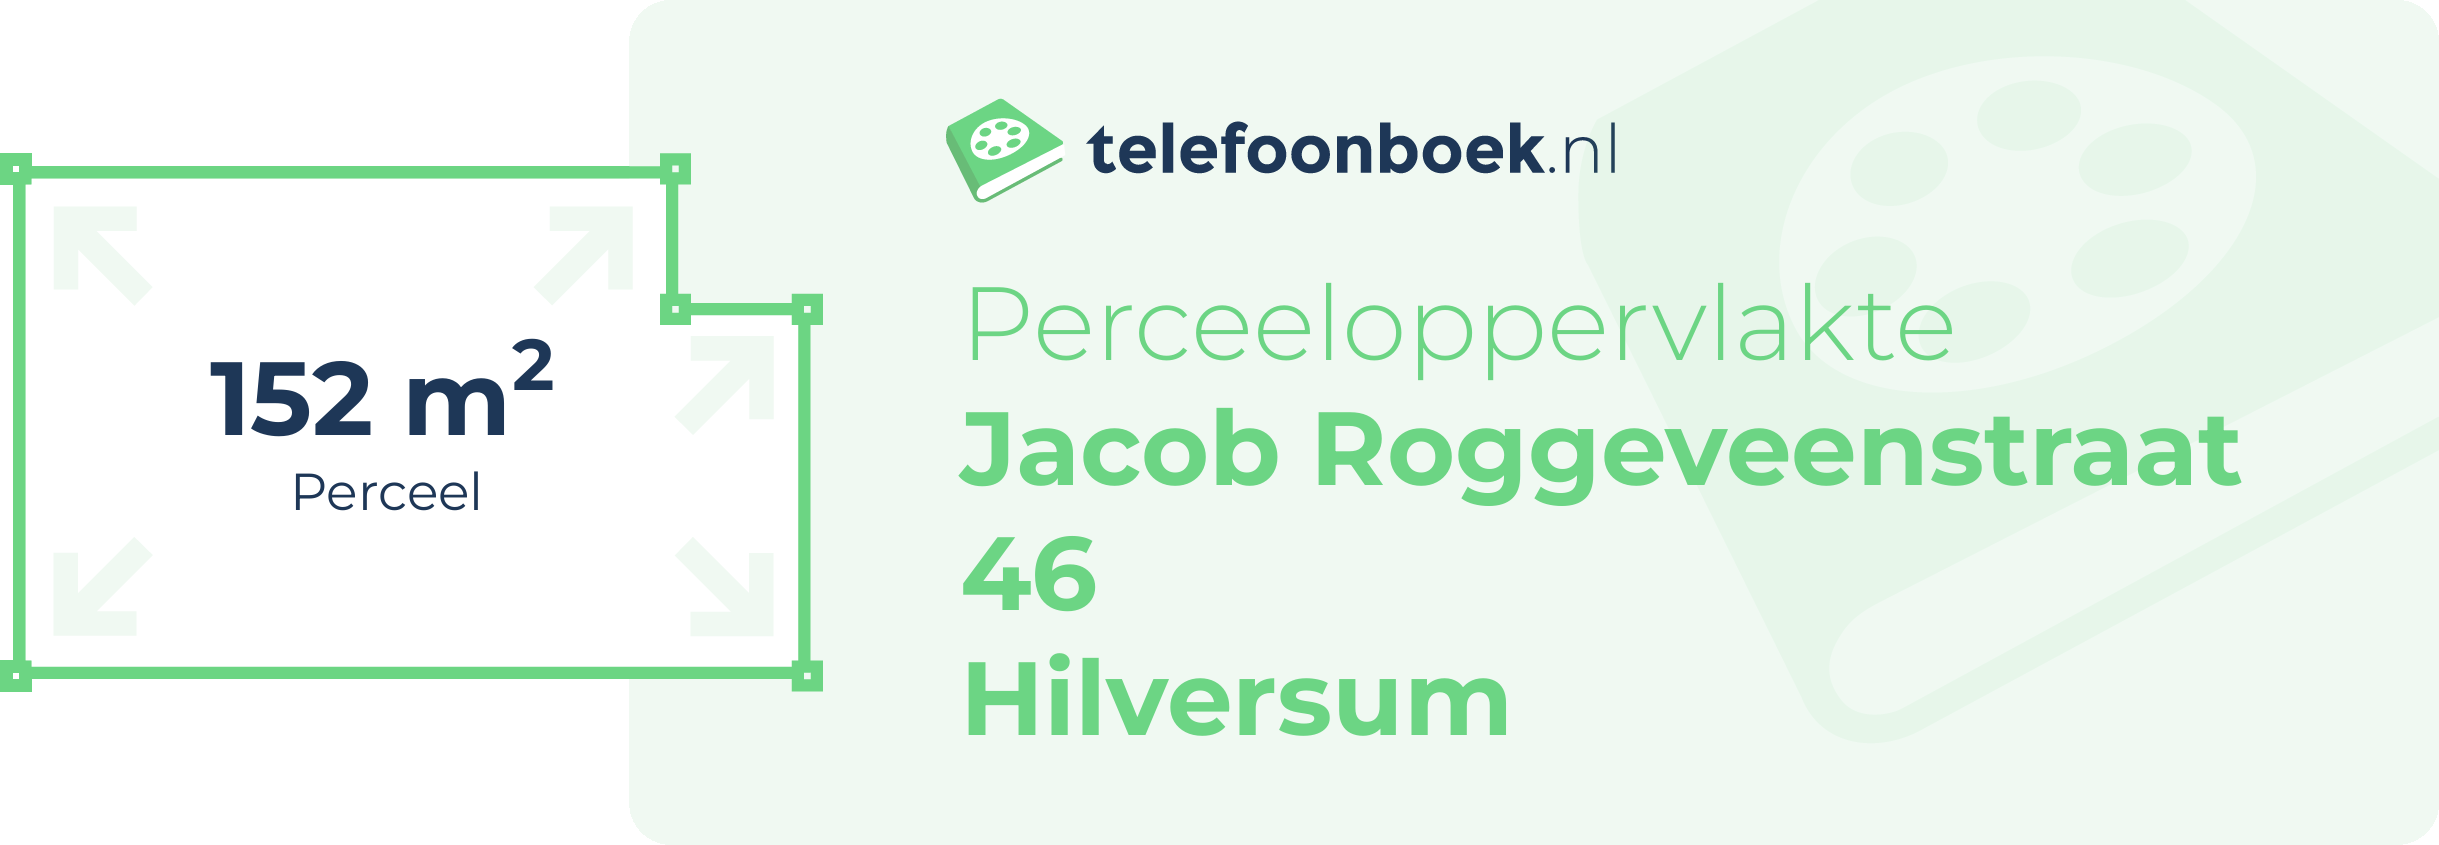 Perceeloppervlakte Jacob Roggeveenstraat 46 Hilversum